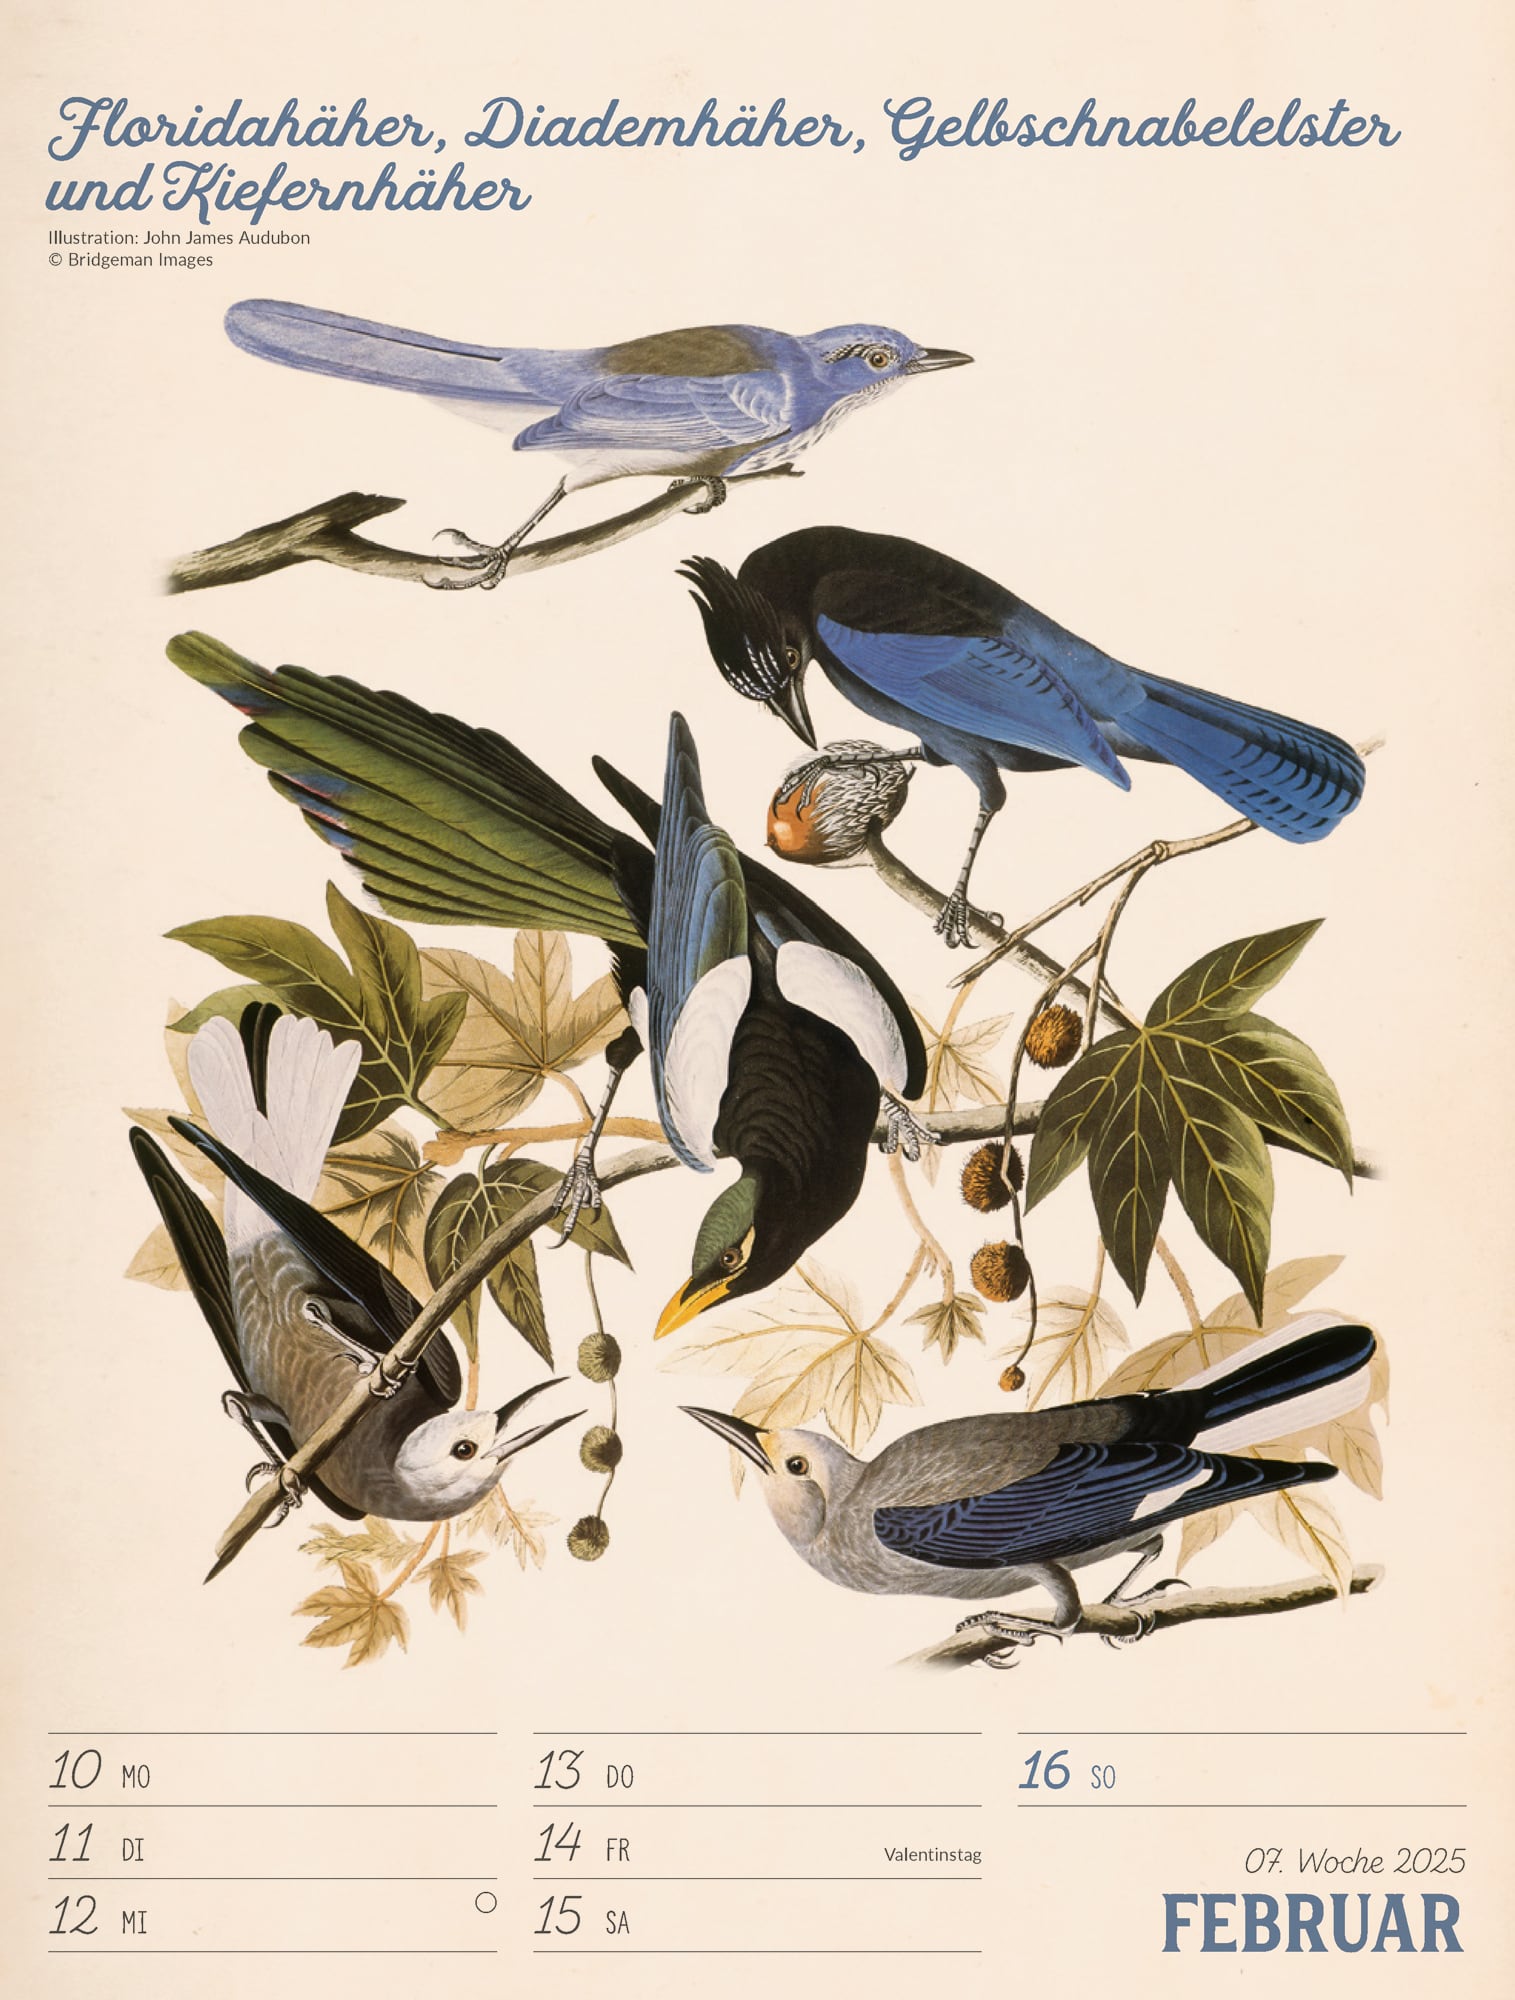 Ackermann Calendar The wonderful World of Birds 2025 - Weekly Planner - Inside View 10